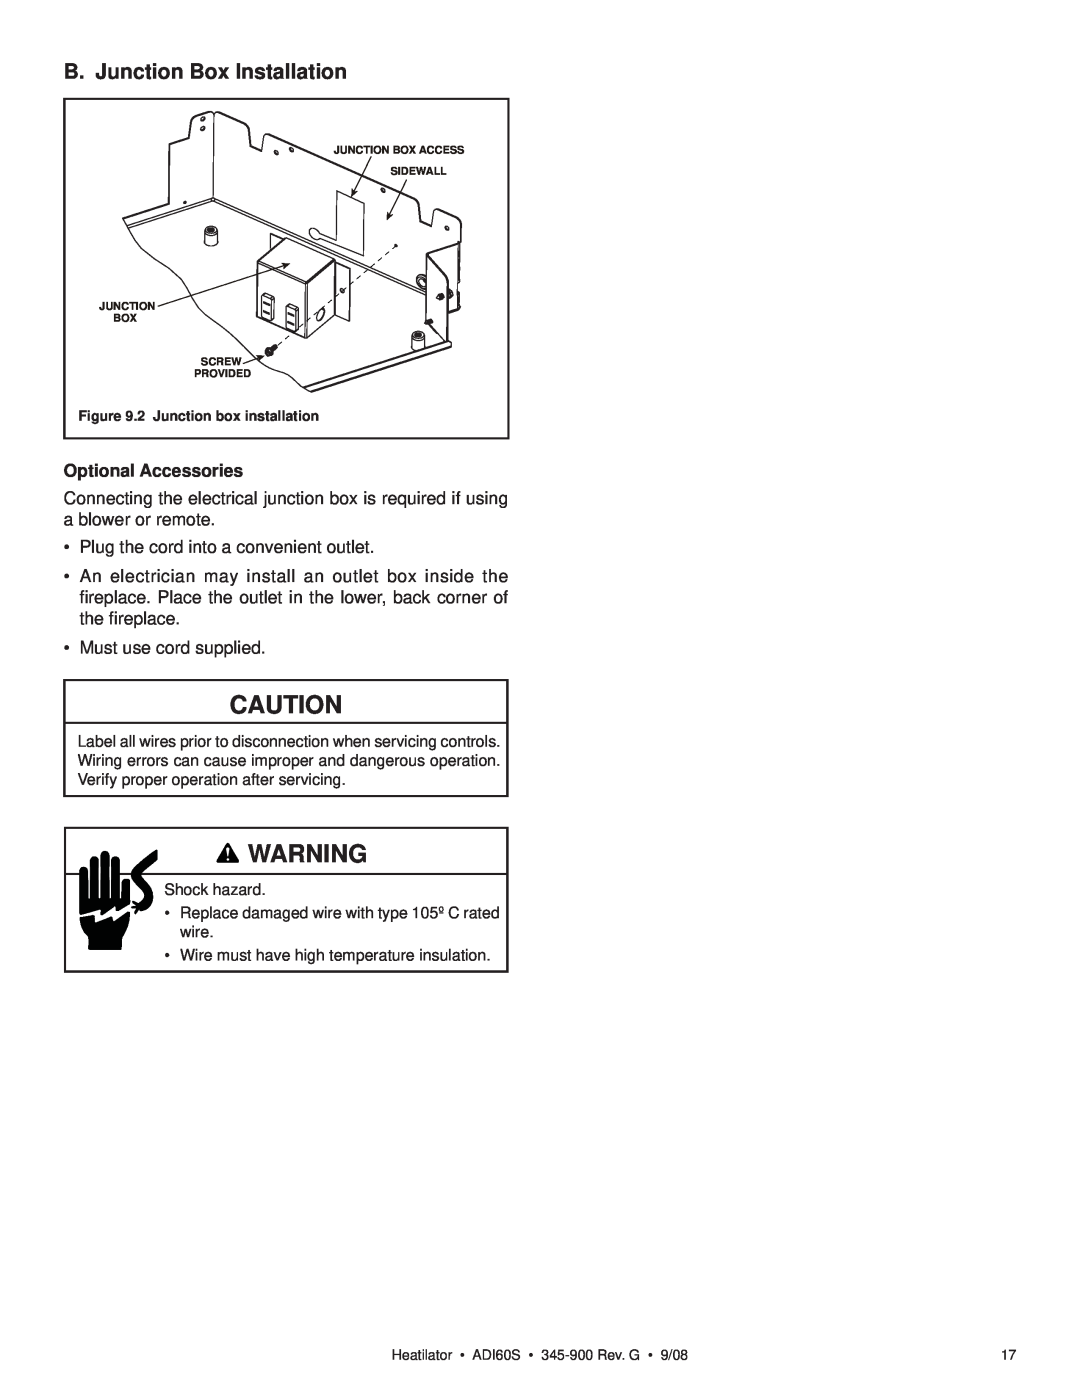 Heatiator ADI60S owner manual B. Junction Box Installation, Optional Accessories 